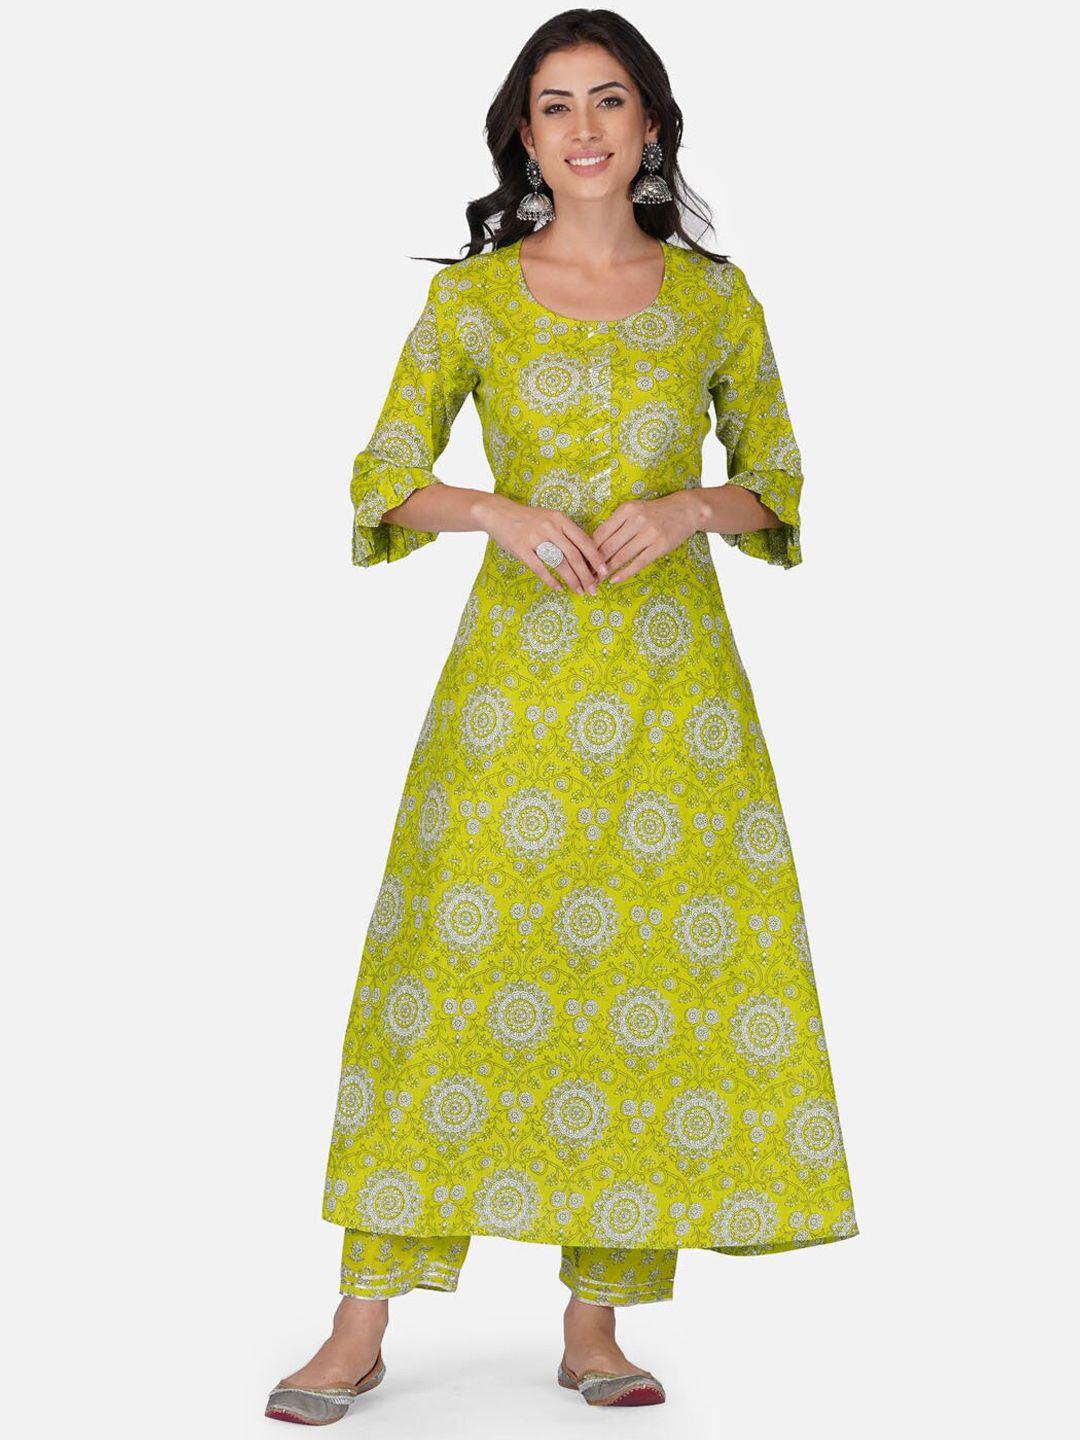 aarti fashion women ethnic motifs printed pure cotton kurta with trousers